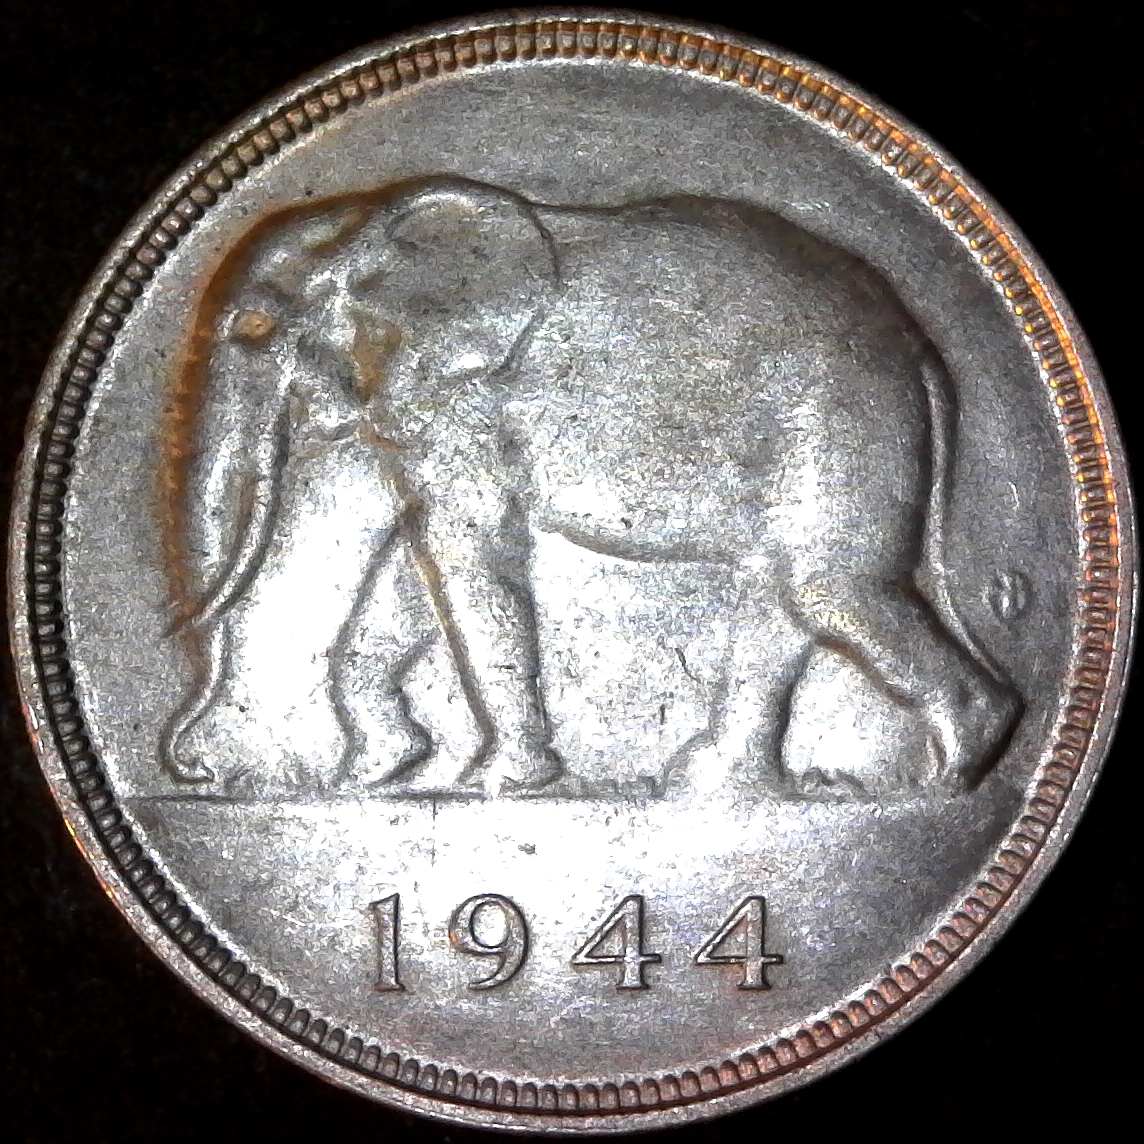 Congo 50 francs 1944 rev.jpg